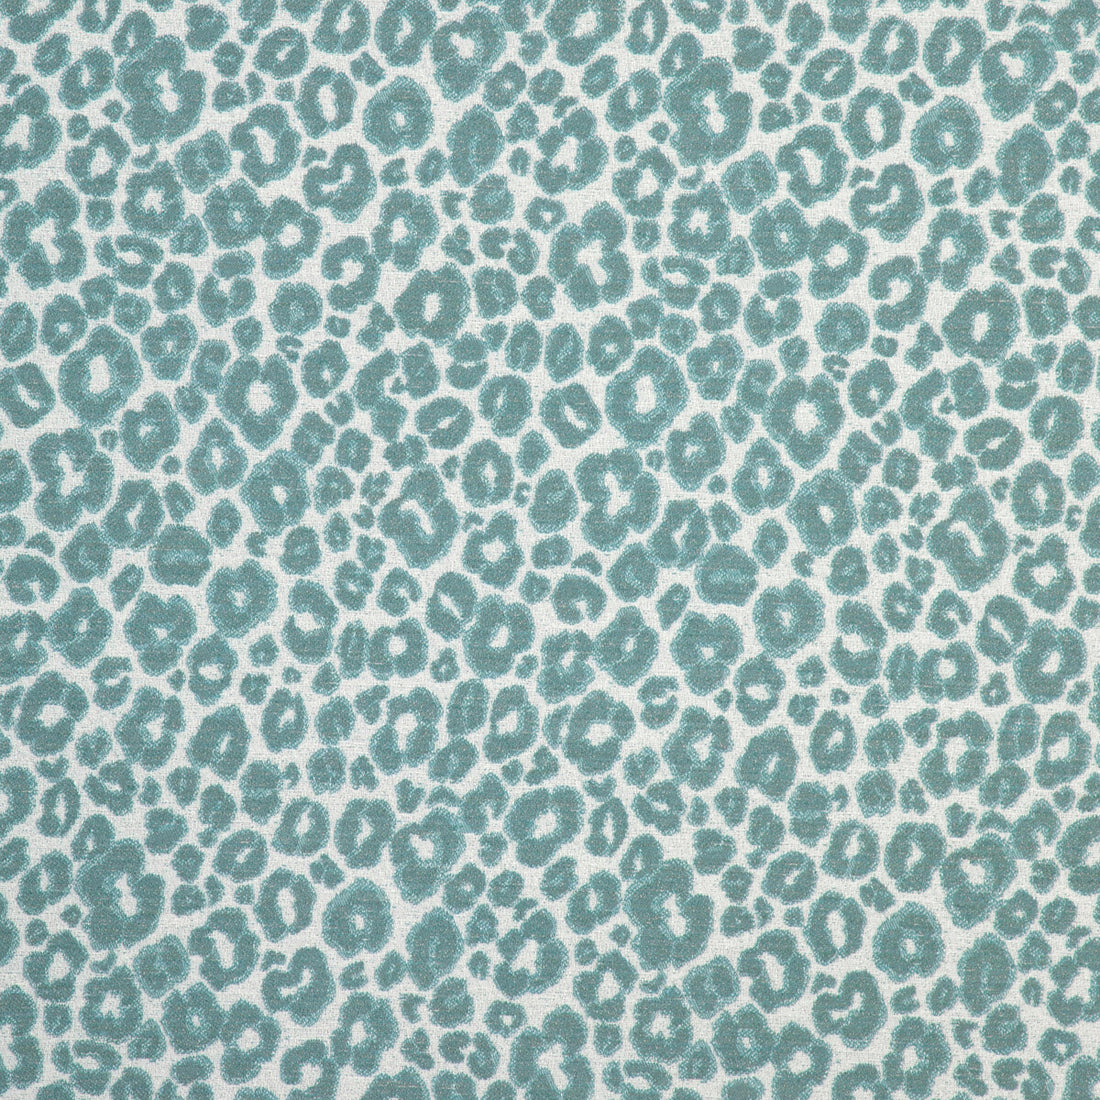 Kravet Design fabric in 36768-13 color - pattern 36768.13.0 - by Kravet Design in the Sea Island Indoor/Outdoor collection